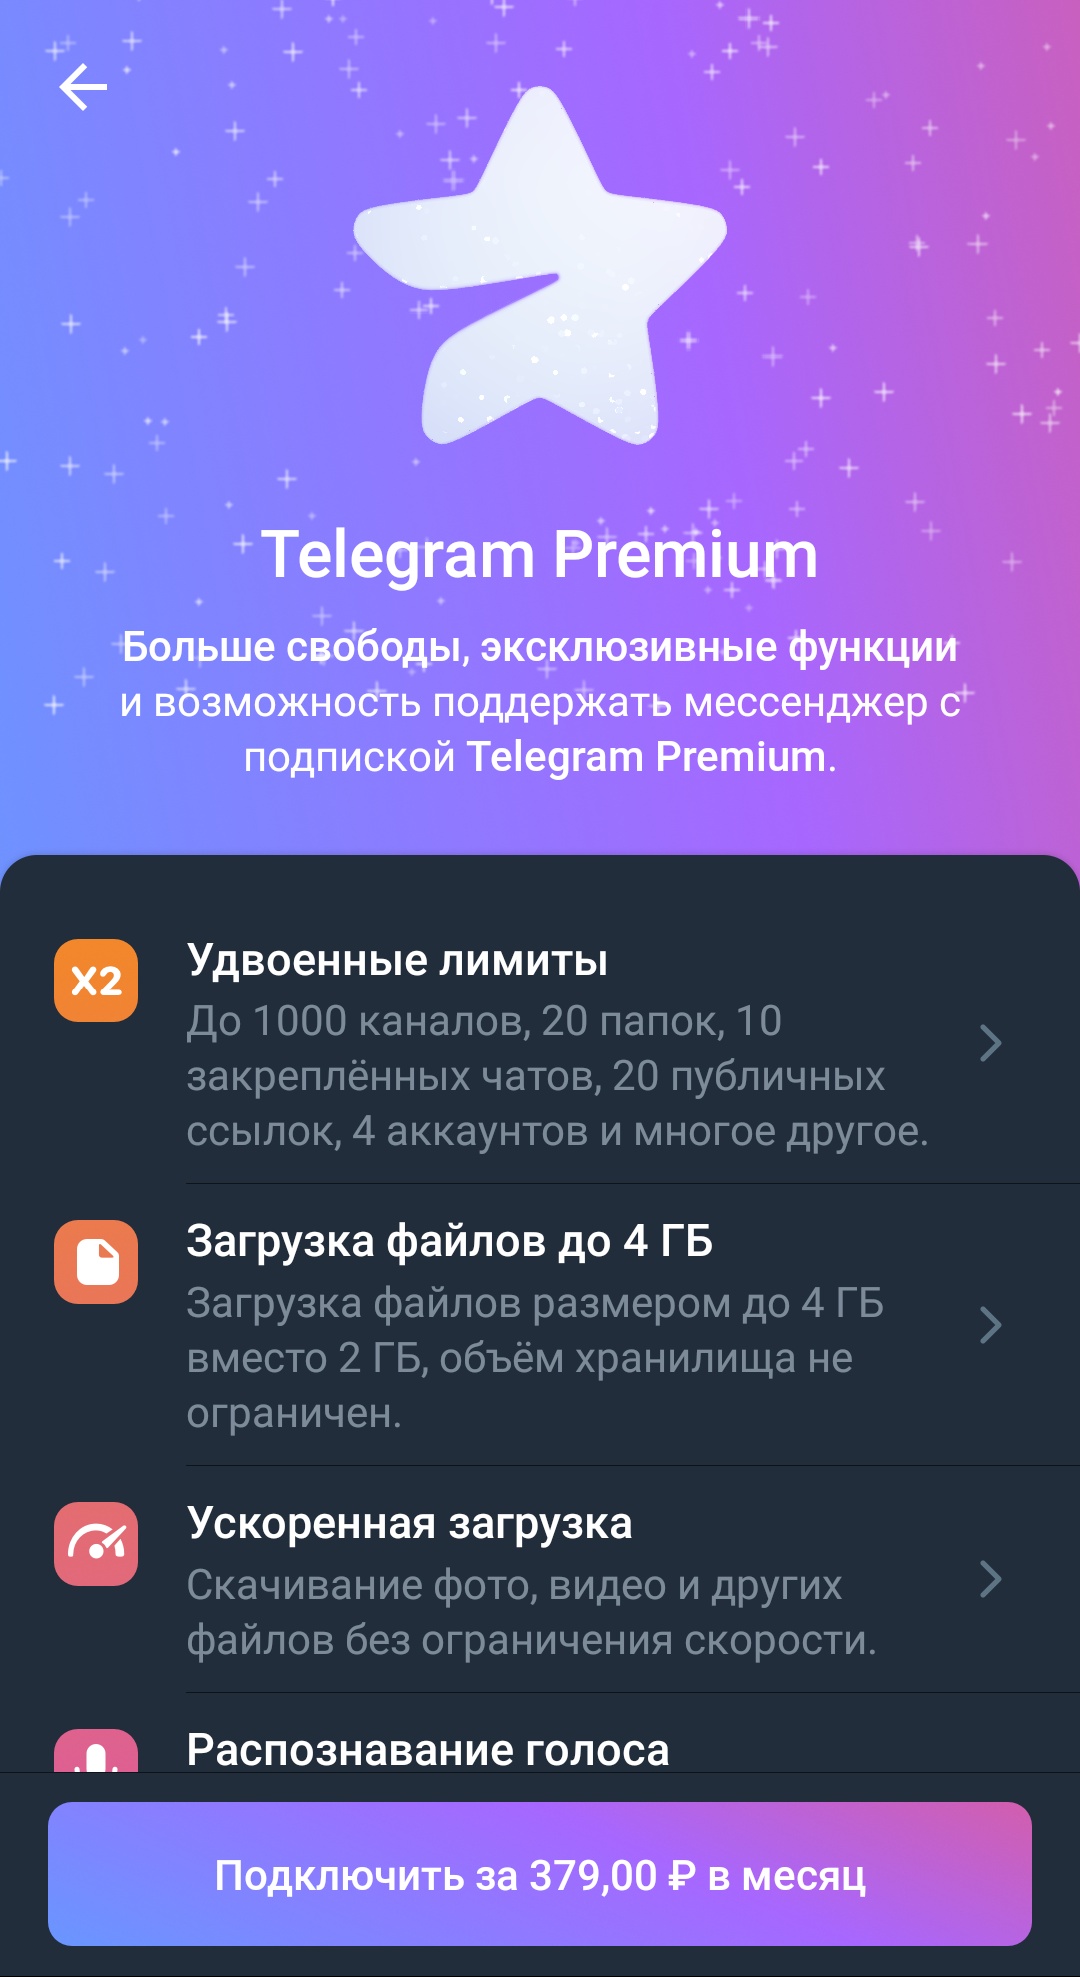 Мод на телеграмм премиум скачать бесплатно на андроид без вирусов на русском языке (120) фото